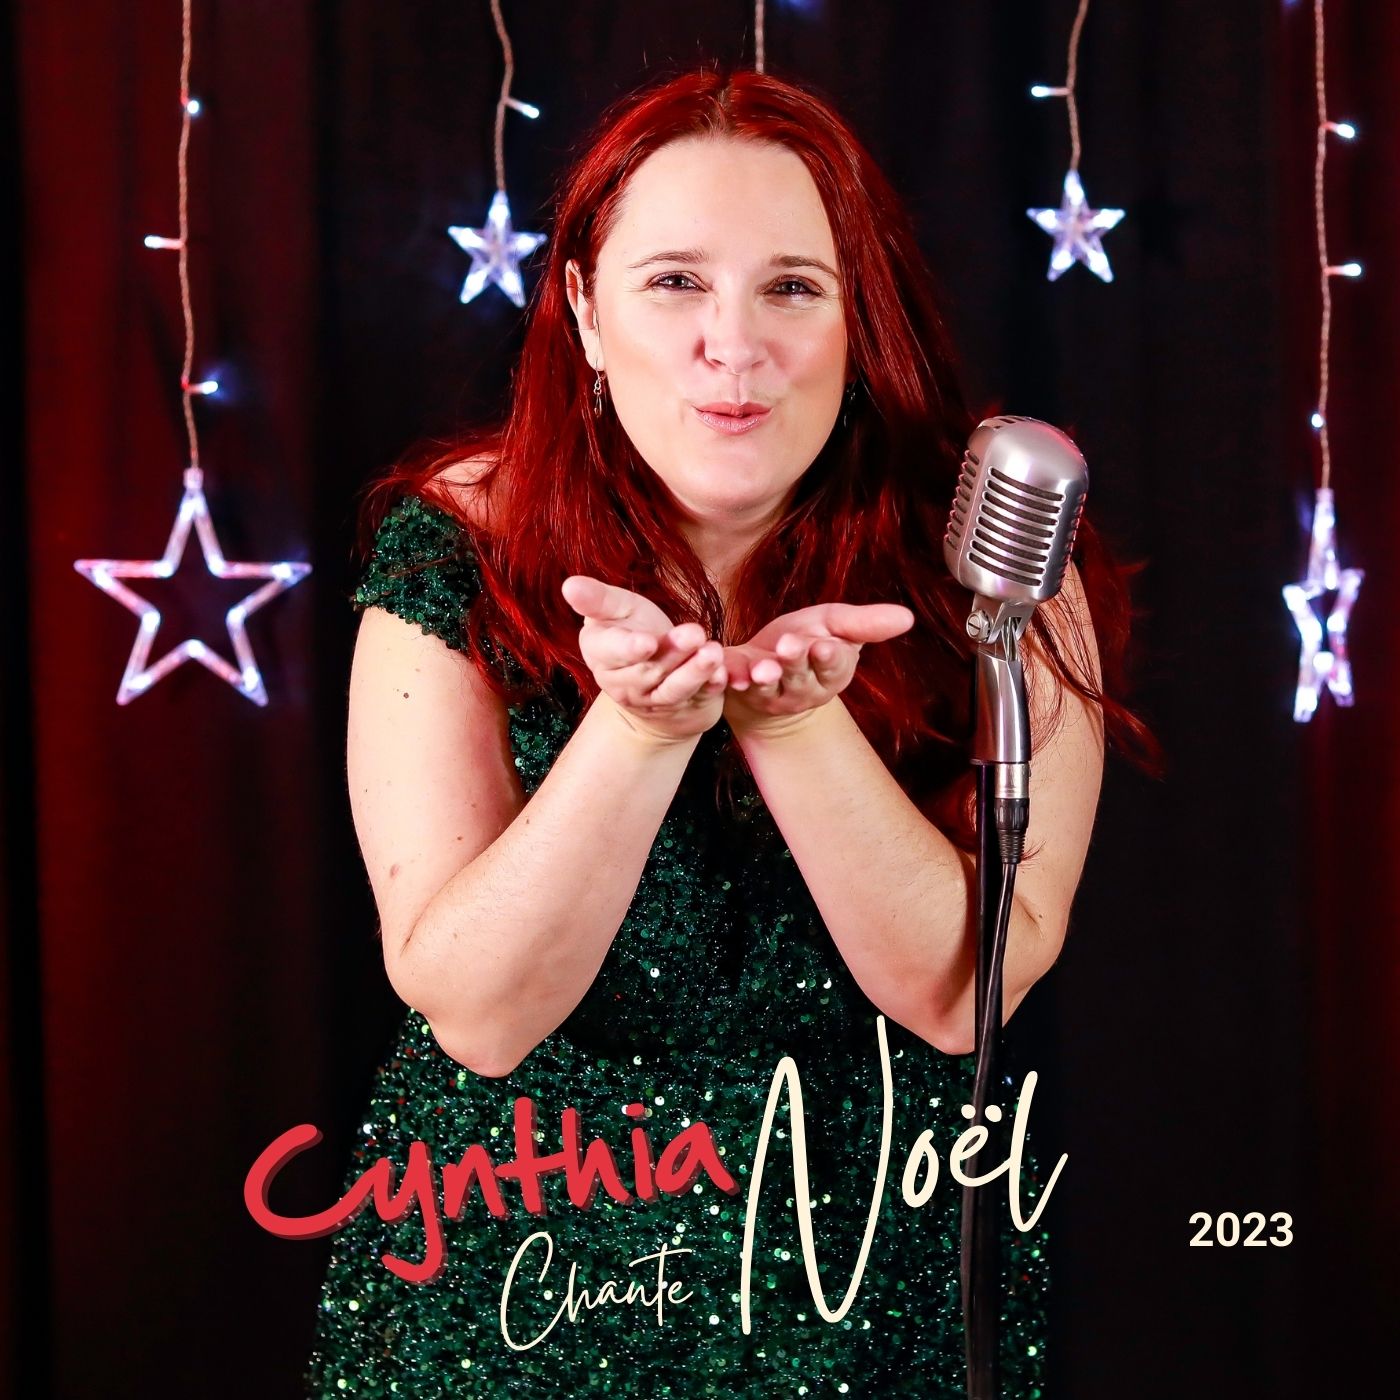 Cynthia chante Noël - Clé USB+titres BONUS+Dédicace